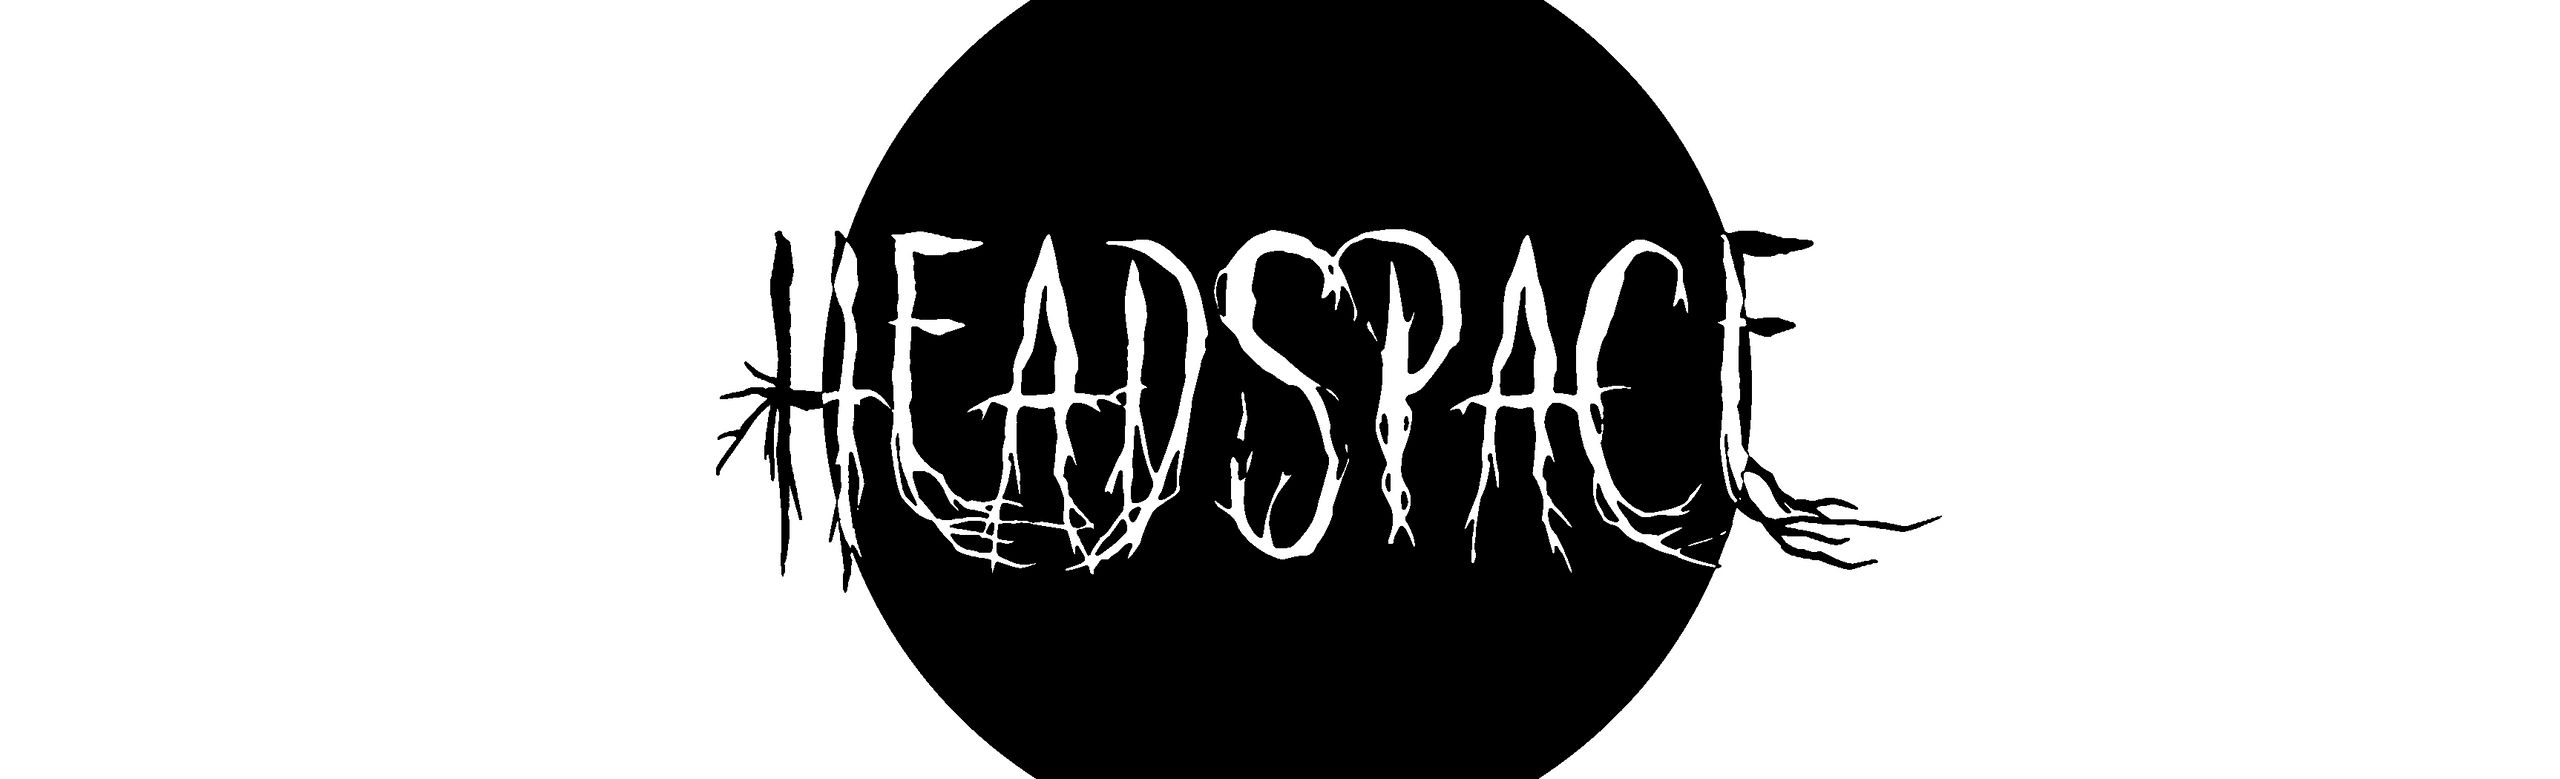 headspace 003 deck 8.5 8-1/2 Skateboard Deck by Headspace